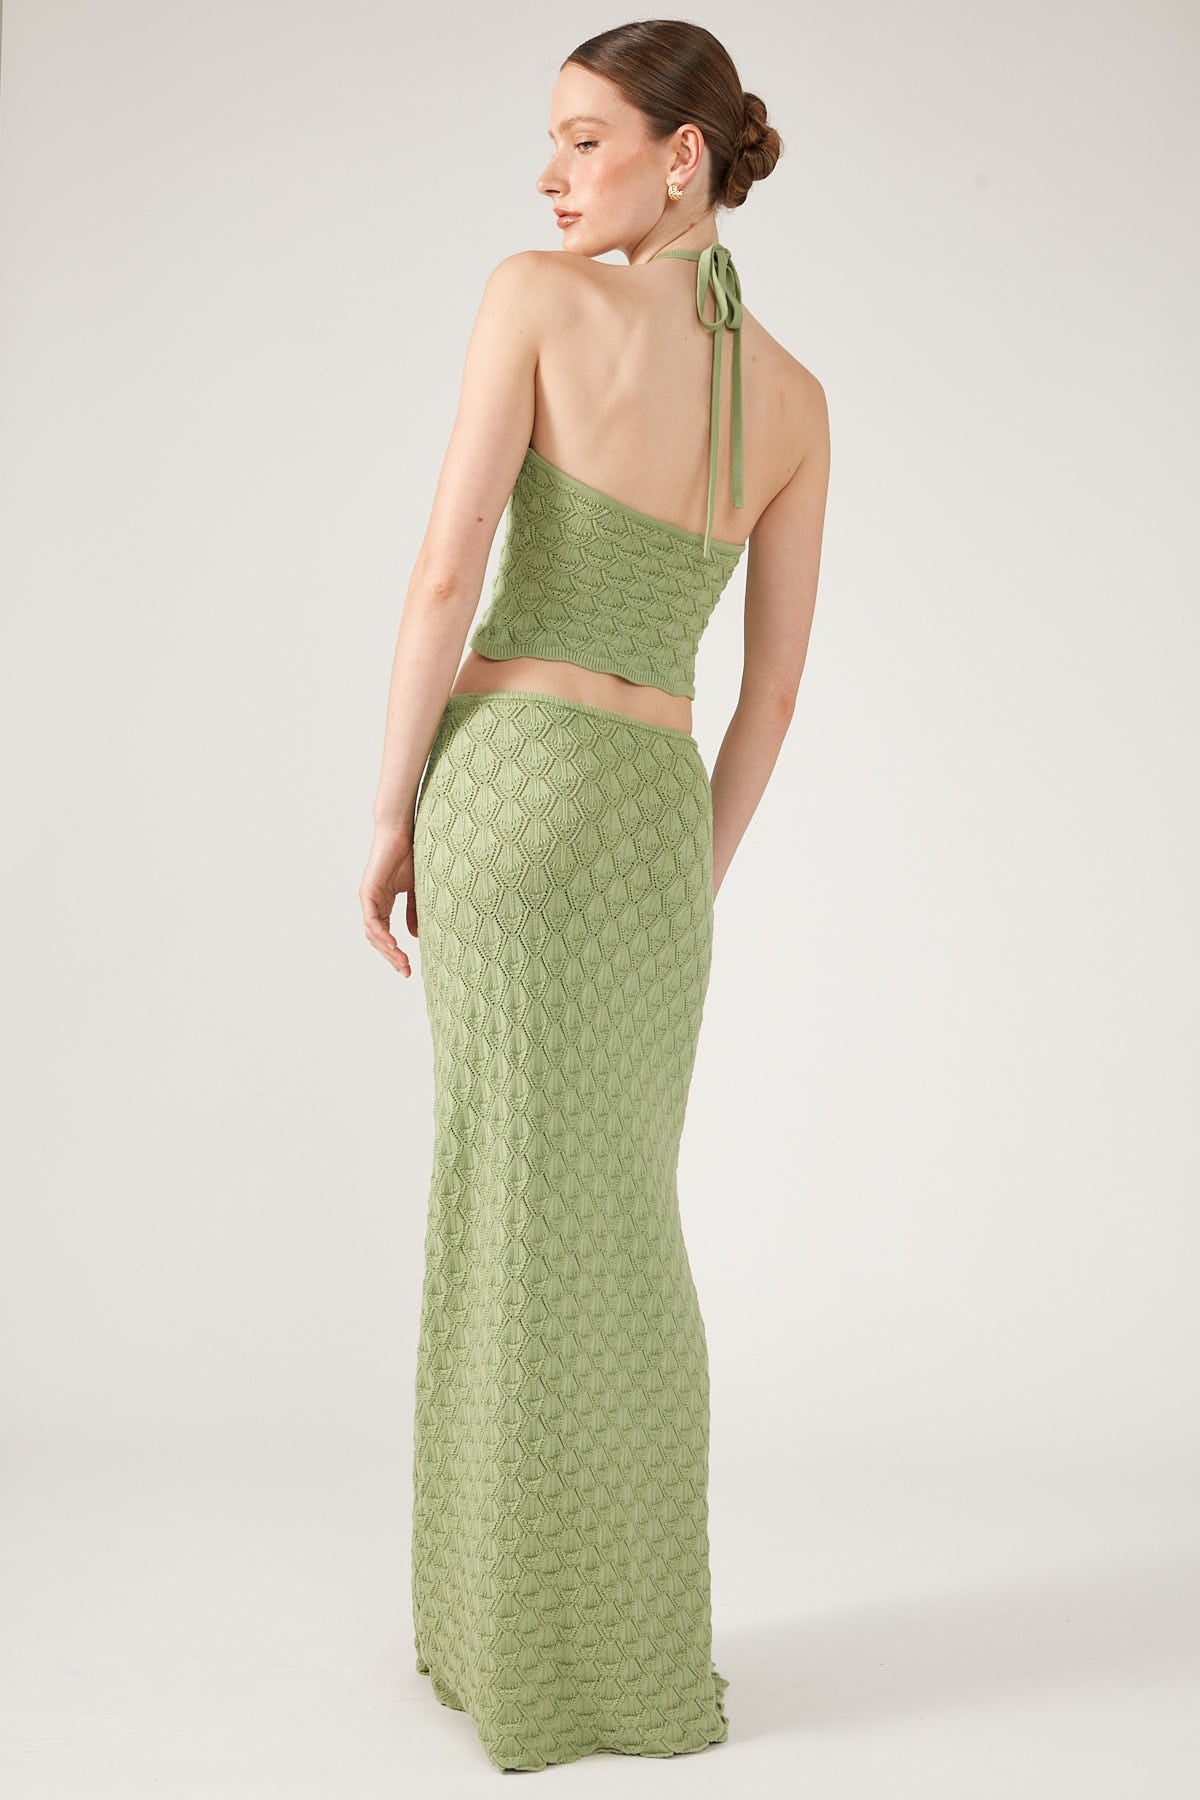 Perfect Stranger Dominique Elissa Golden Hour Crochet Knit Maxi Skirt Green